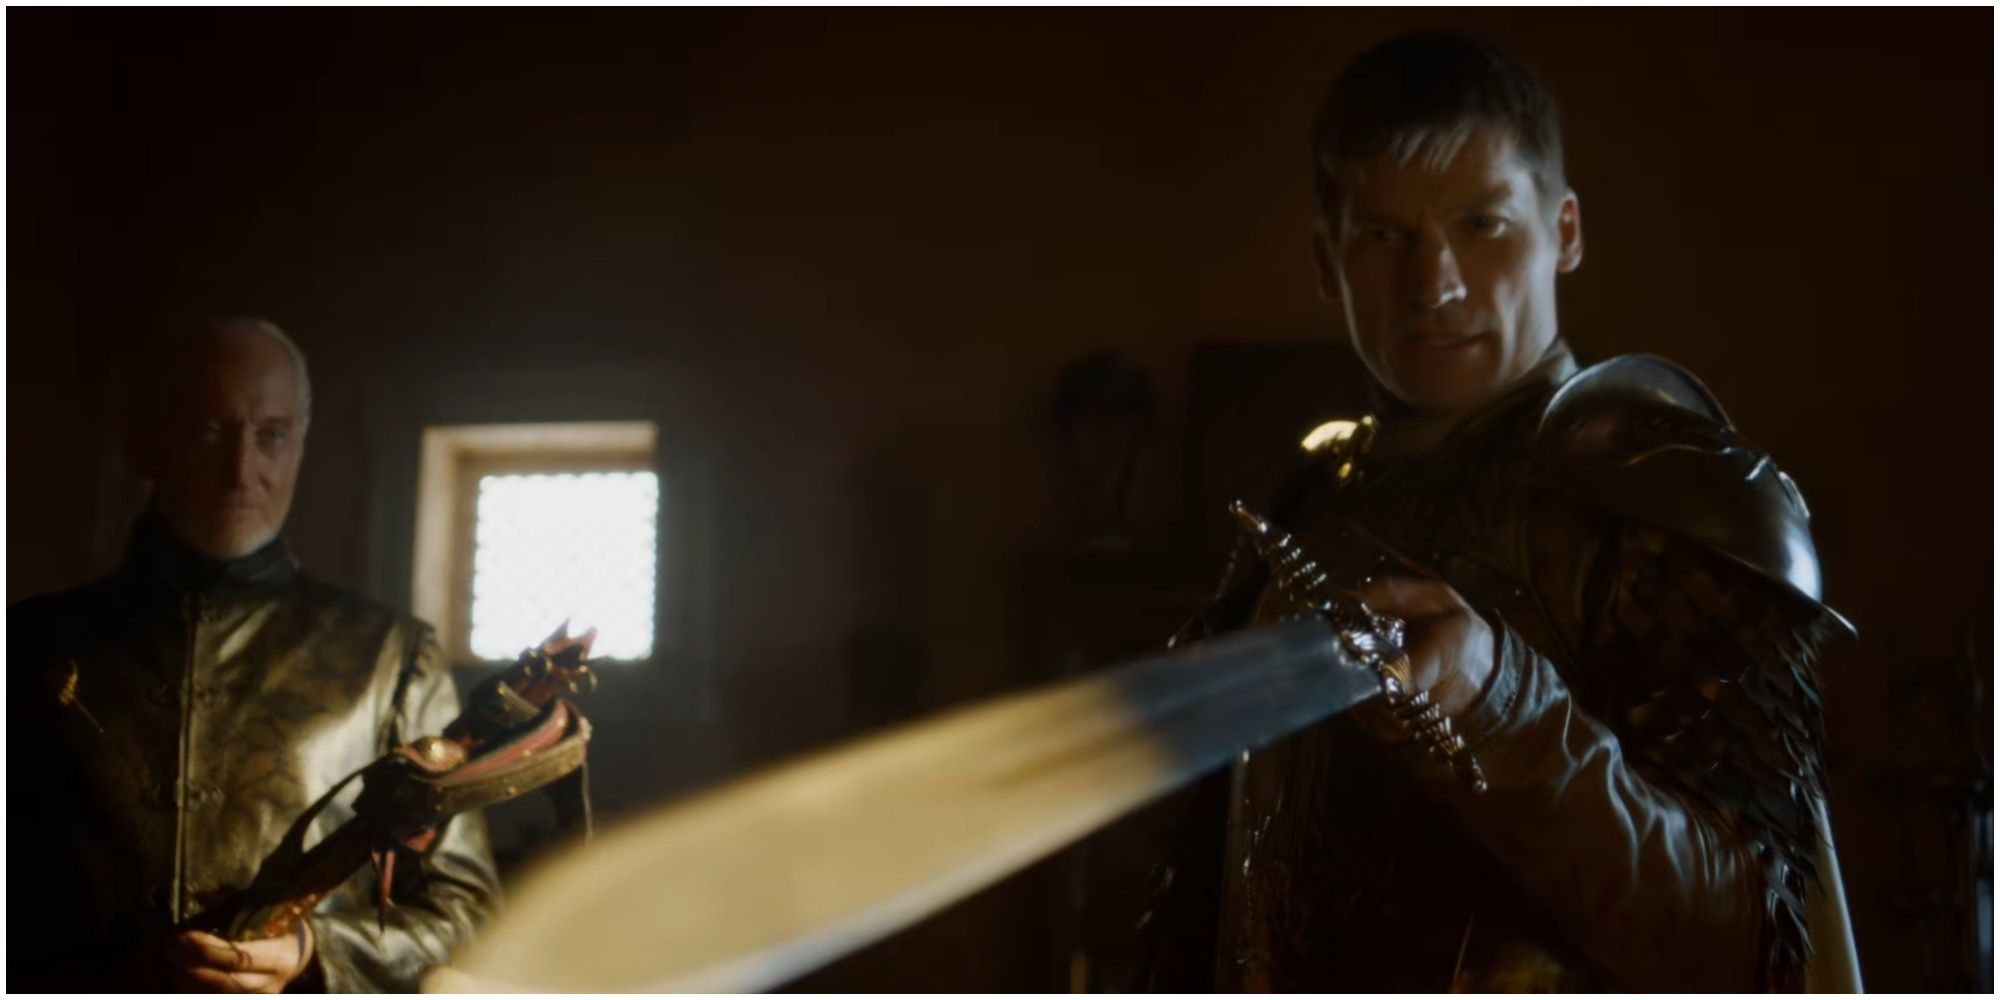 Tywin apresenta Oathkeeper (sem nome na cena) para Jaime Lannister em Game of Thrones.